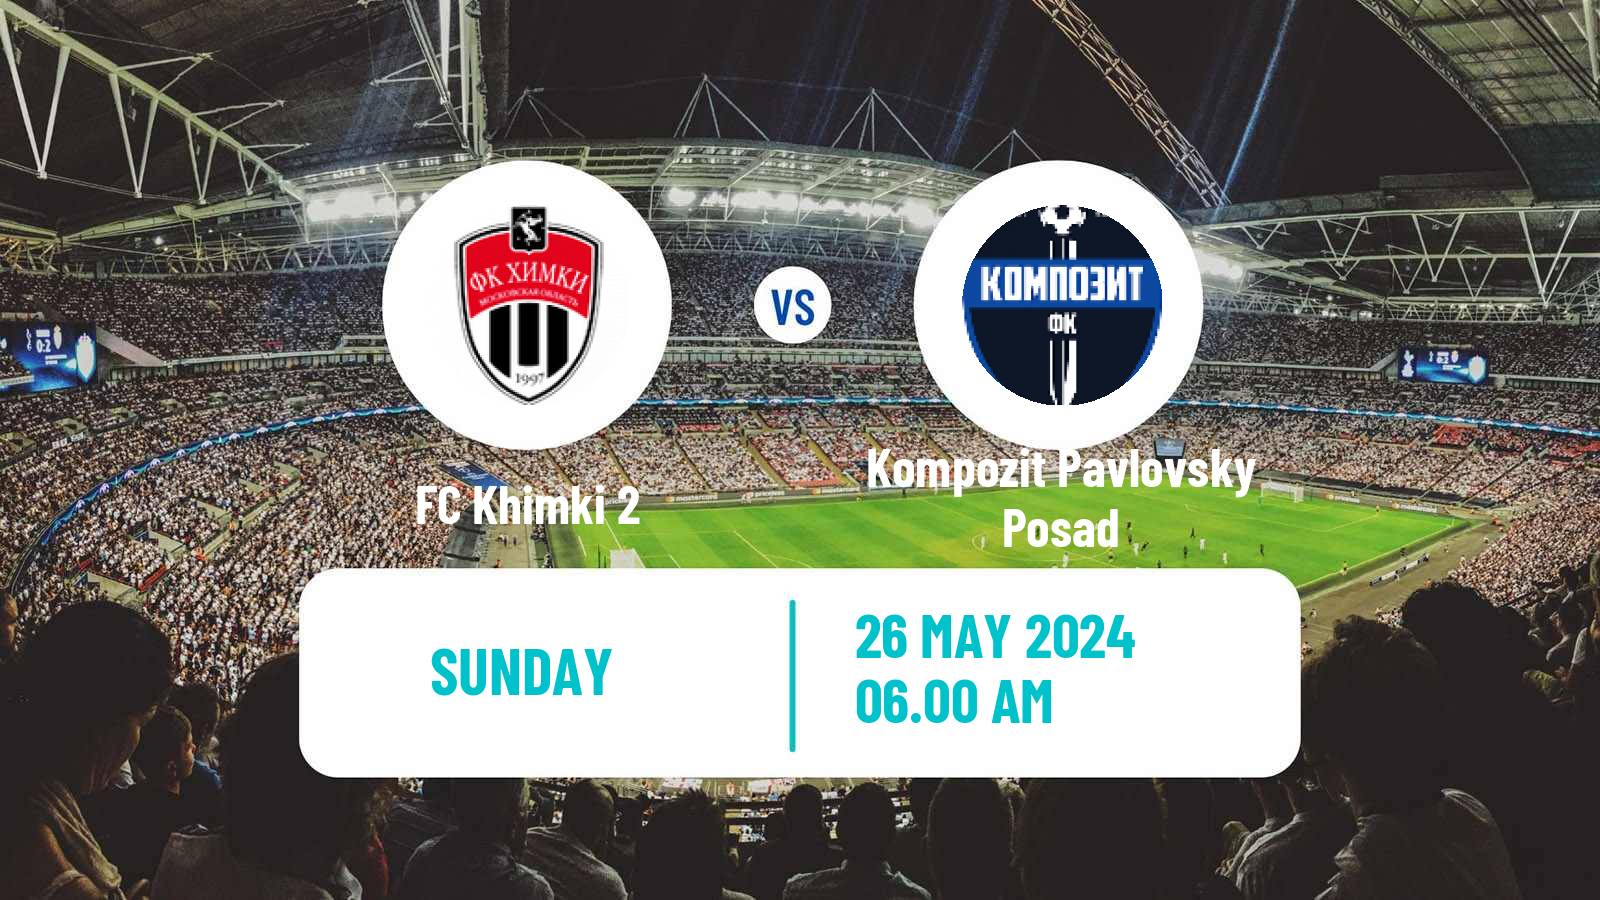 Soccer FNL 2 Division B Group 3 Khimki 2 - Kompozit Pavlovsky Posad